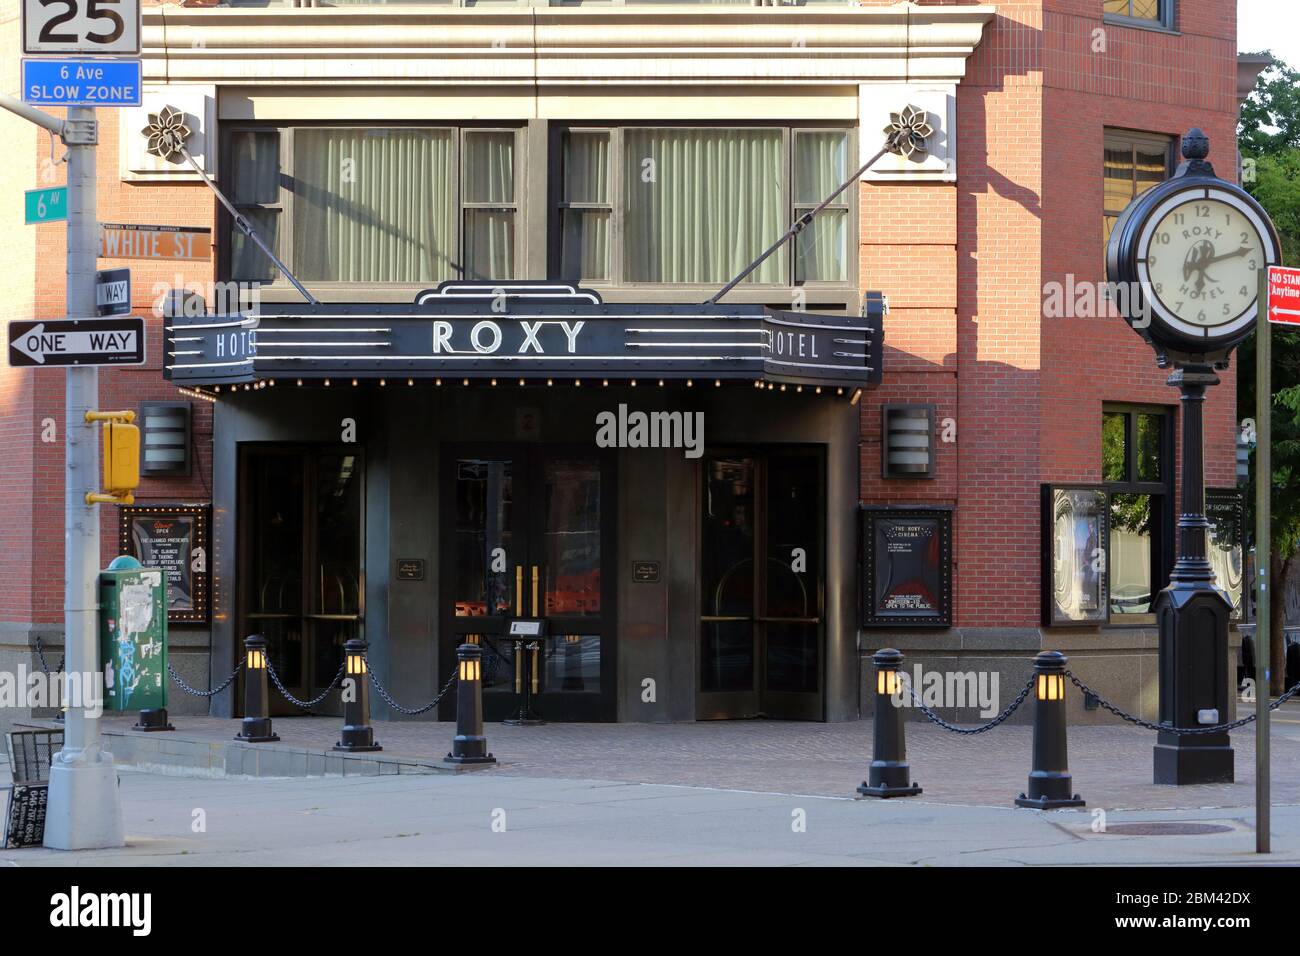 Roxy Hotel Tribeca, Roxy Cinema, 2 Sixth Ave, New York, NY. Façade extérieure d'un hôtel de luxe dans le quartier Tribeca de Manhattan. Banque D'Images